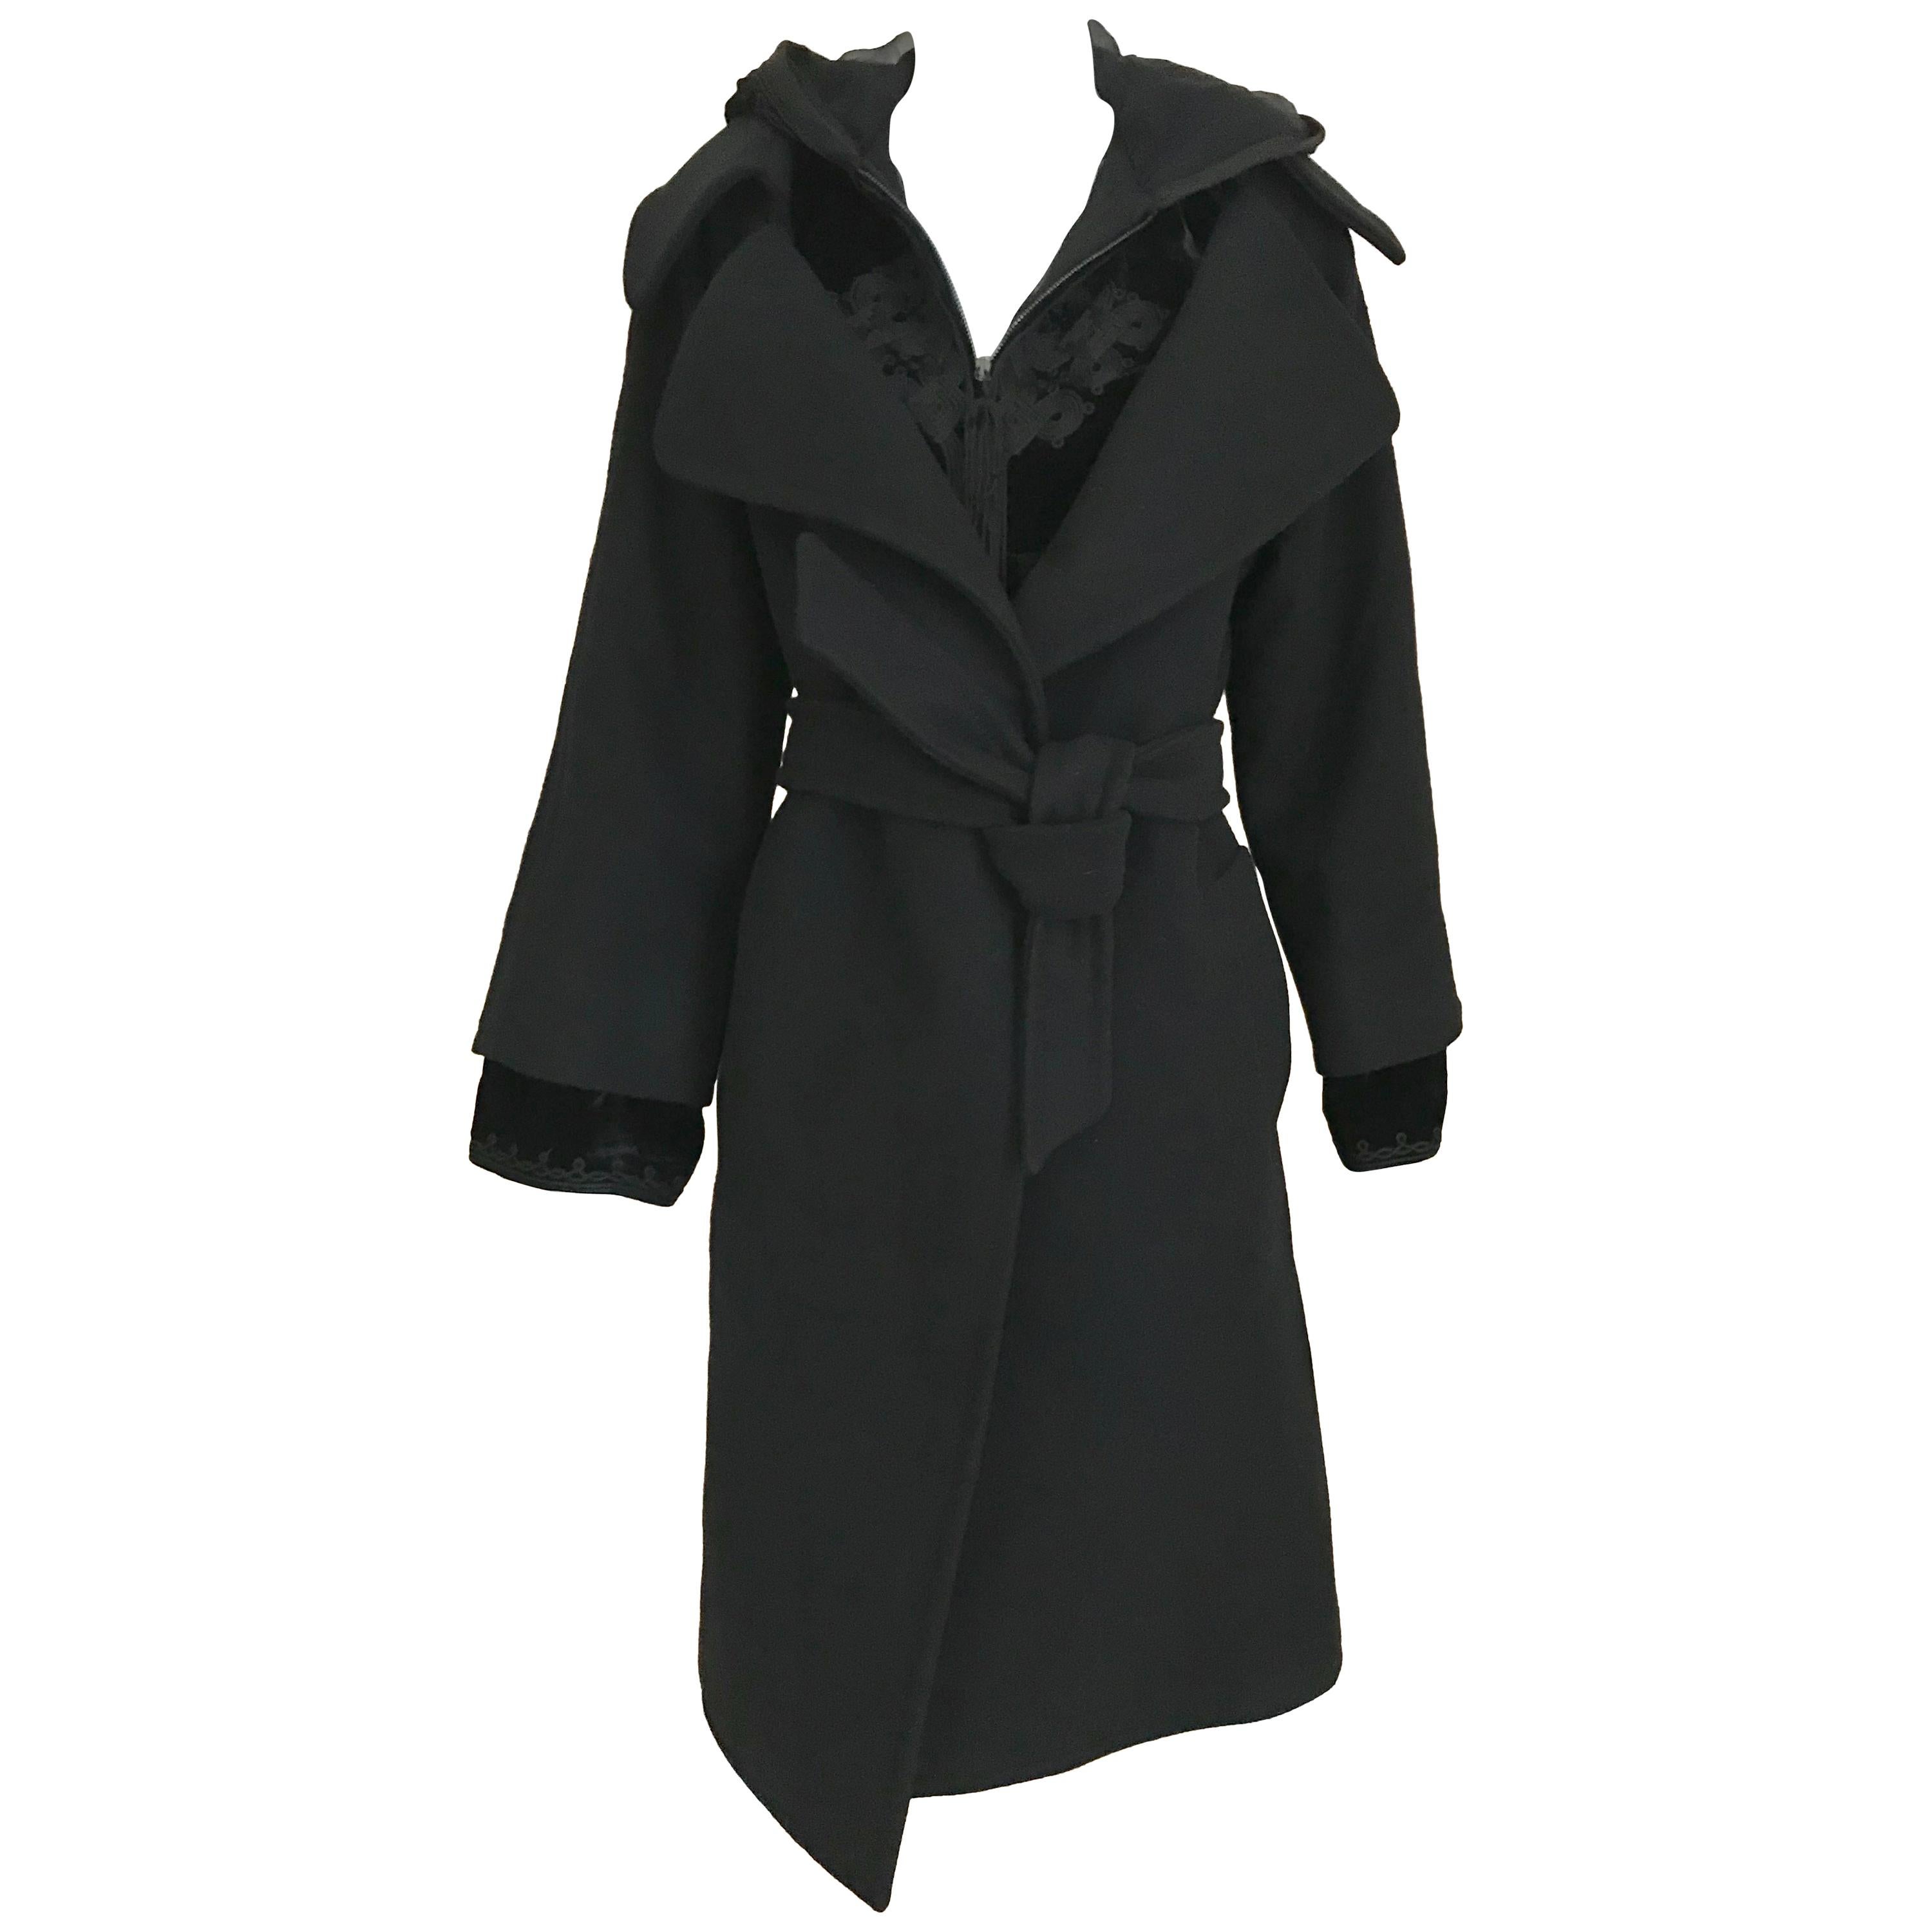 Jean Paul Gaultier Black Wool Coat with Silk Velvet Layer and Hood